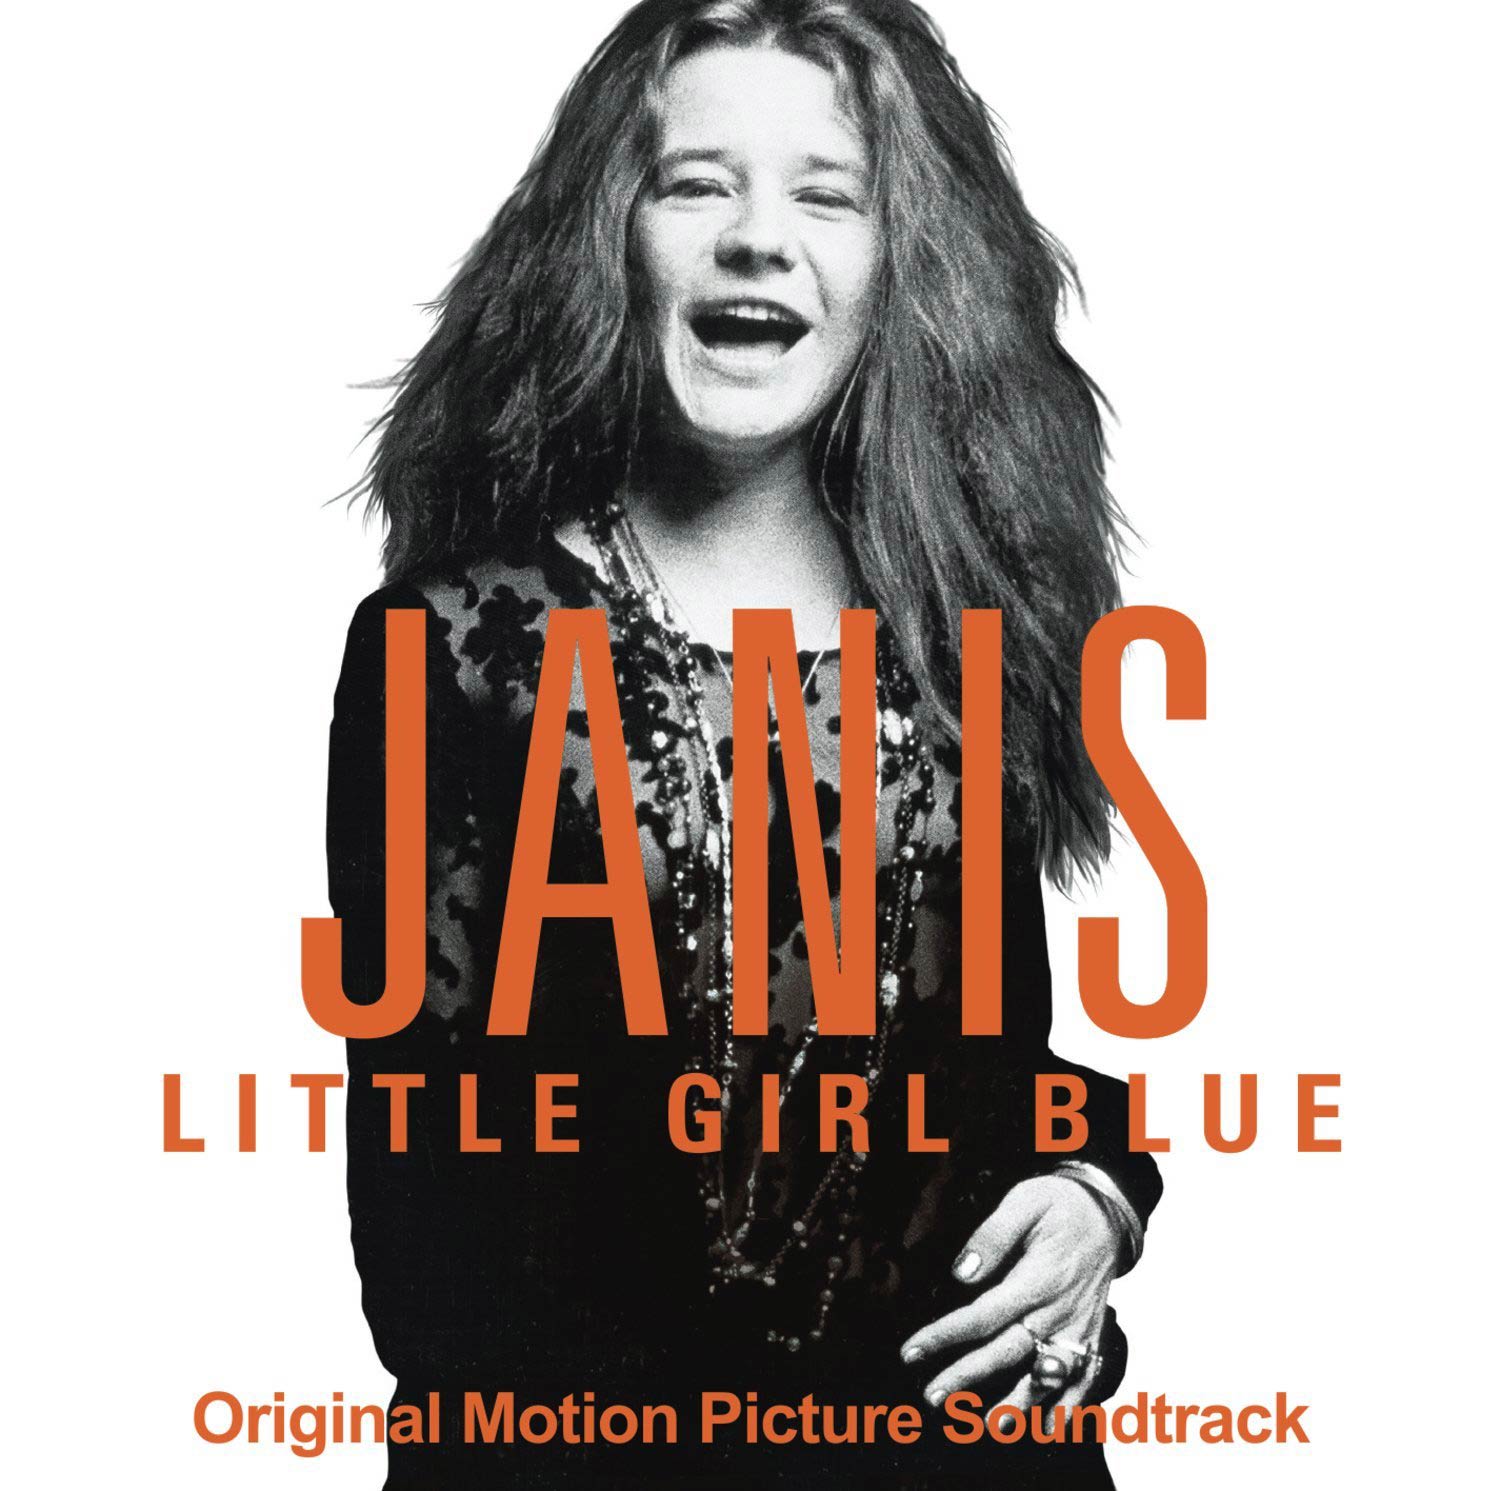 Janis Joplin: Janis Little girl blue (Original Motion Picture Soundtrack),  la portada del disco